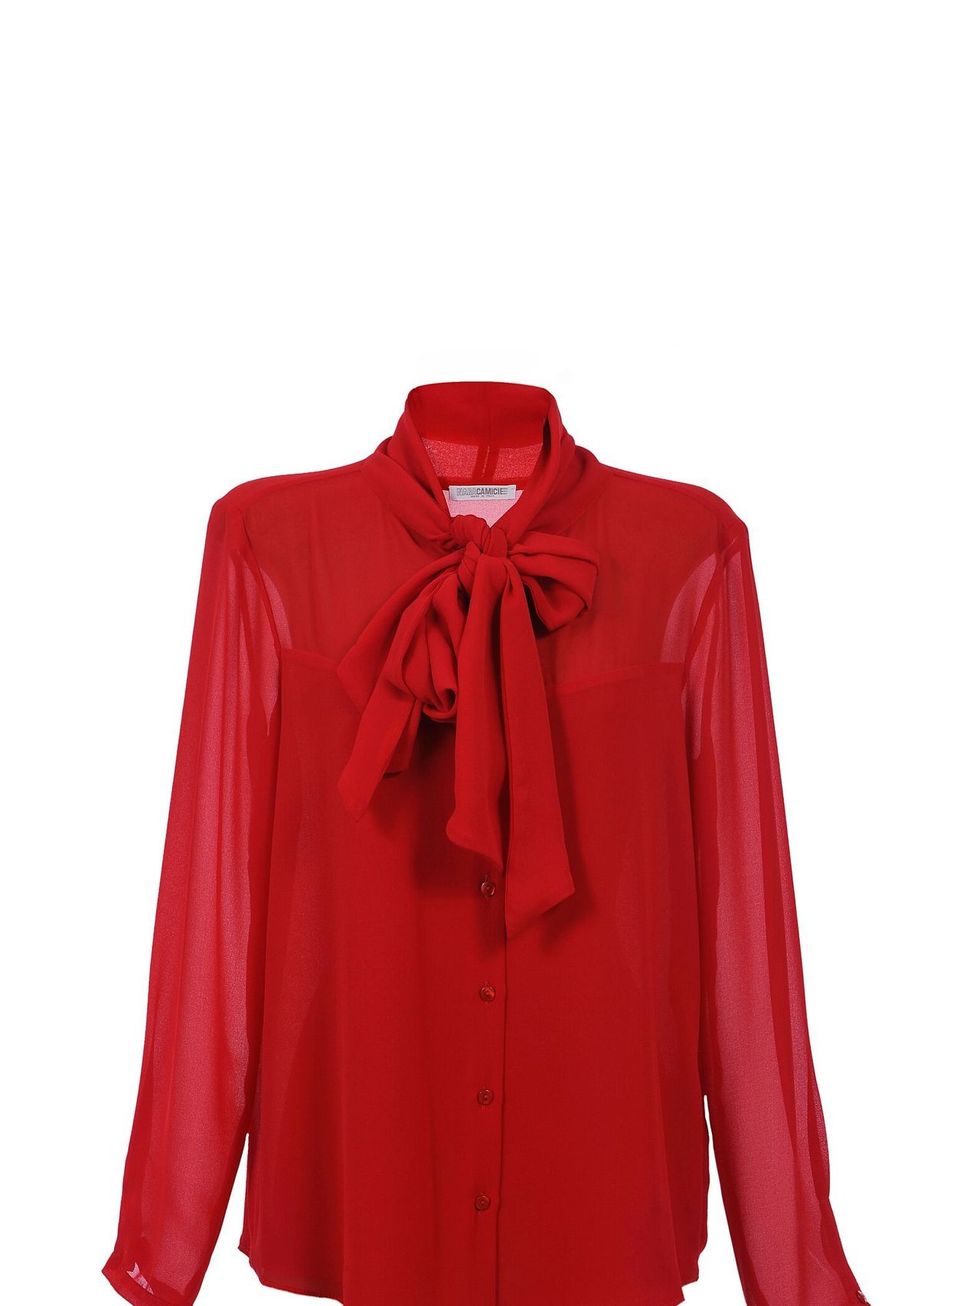 Collar, Sleeve, Textile, Red, Carmine, Maroon, Fashion, Clothes hanger, Fashion design, Coquelicot, 